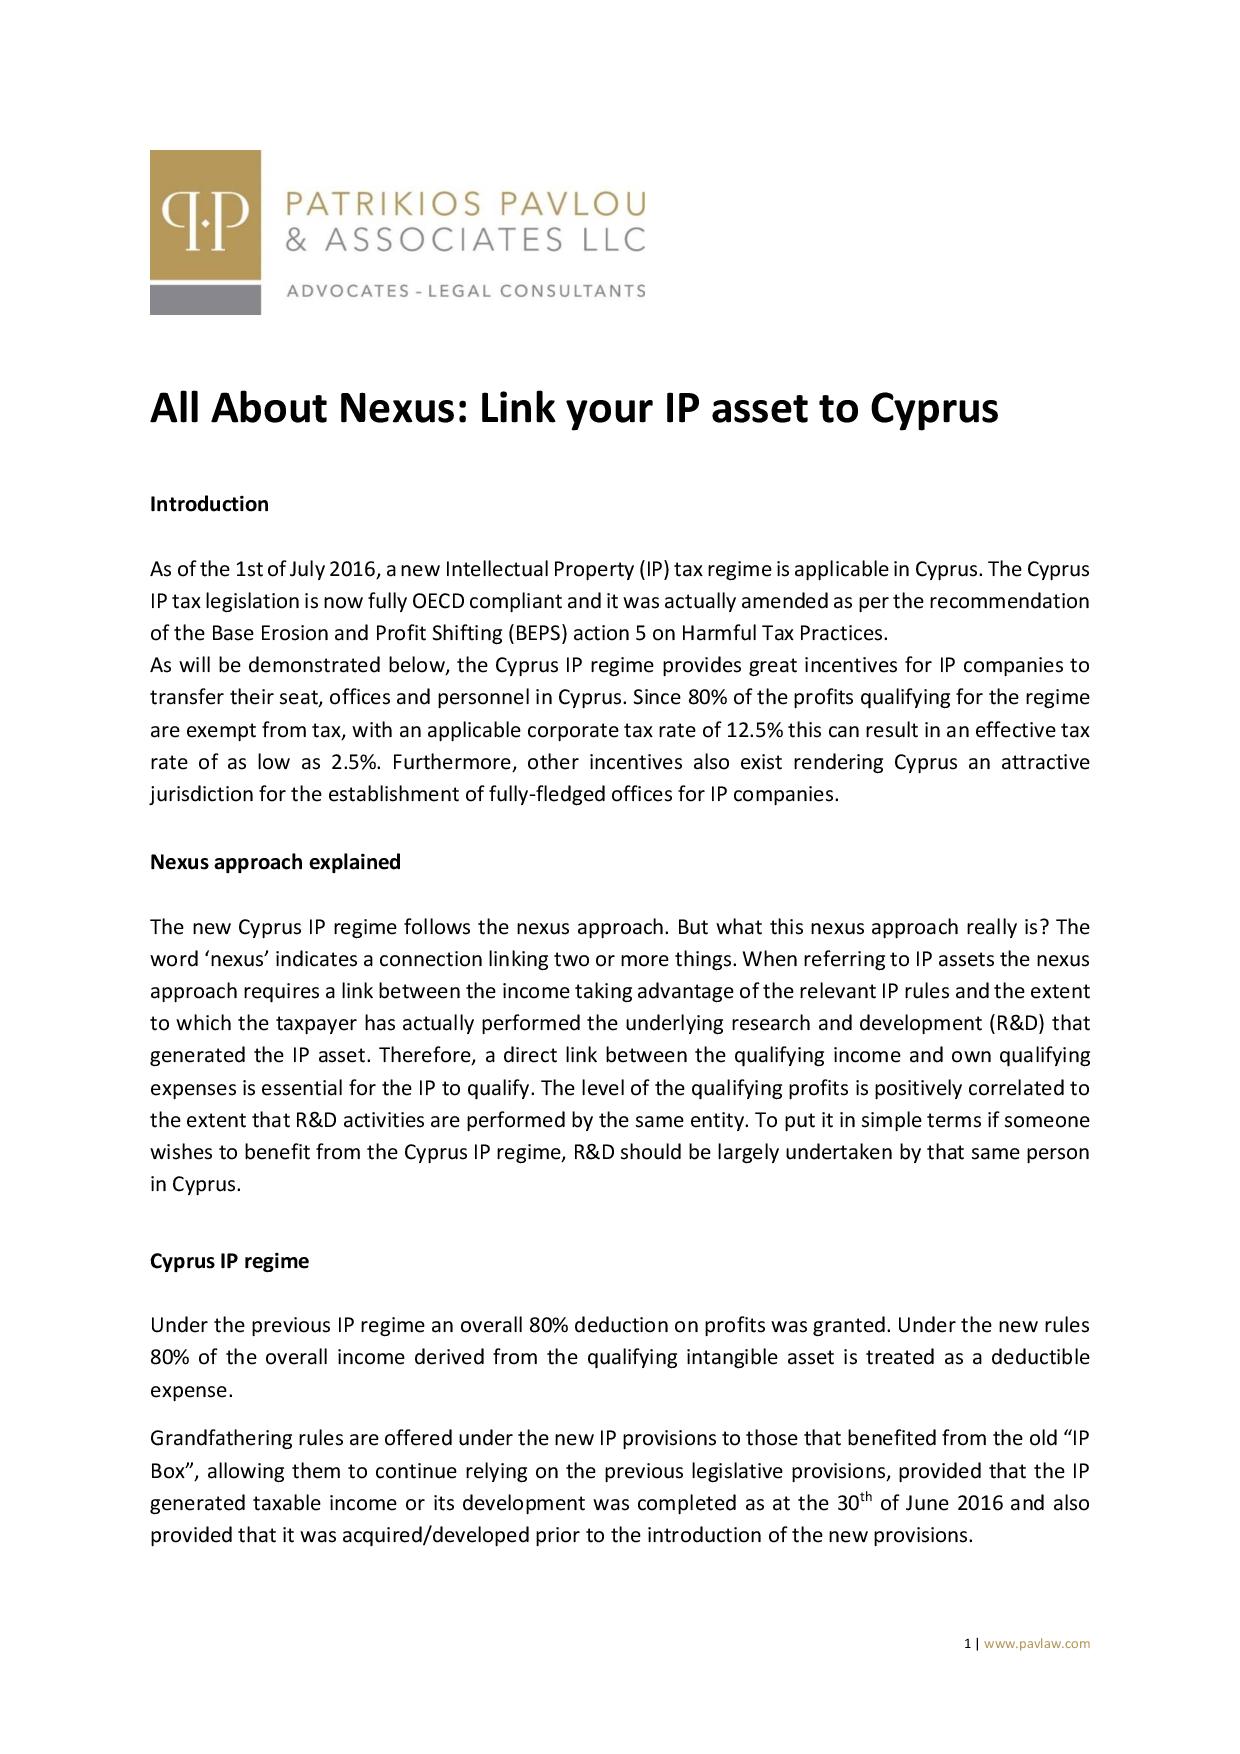 Patrikios Pavlou & Associates LLC: All About Nexus - Link your IP asset to Cyprus